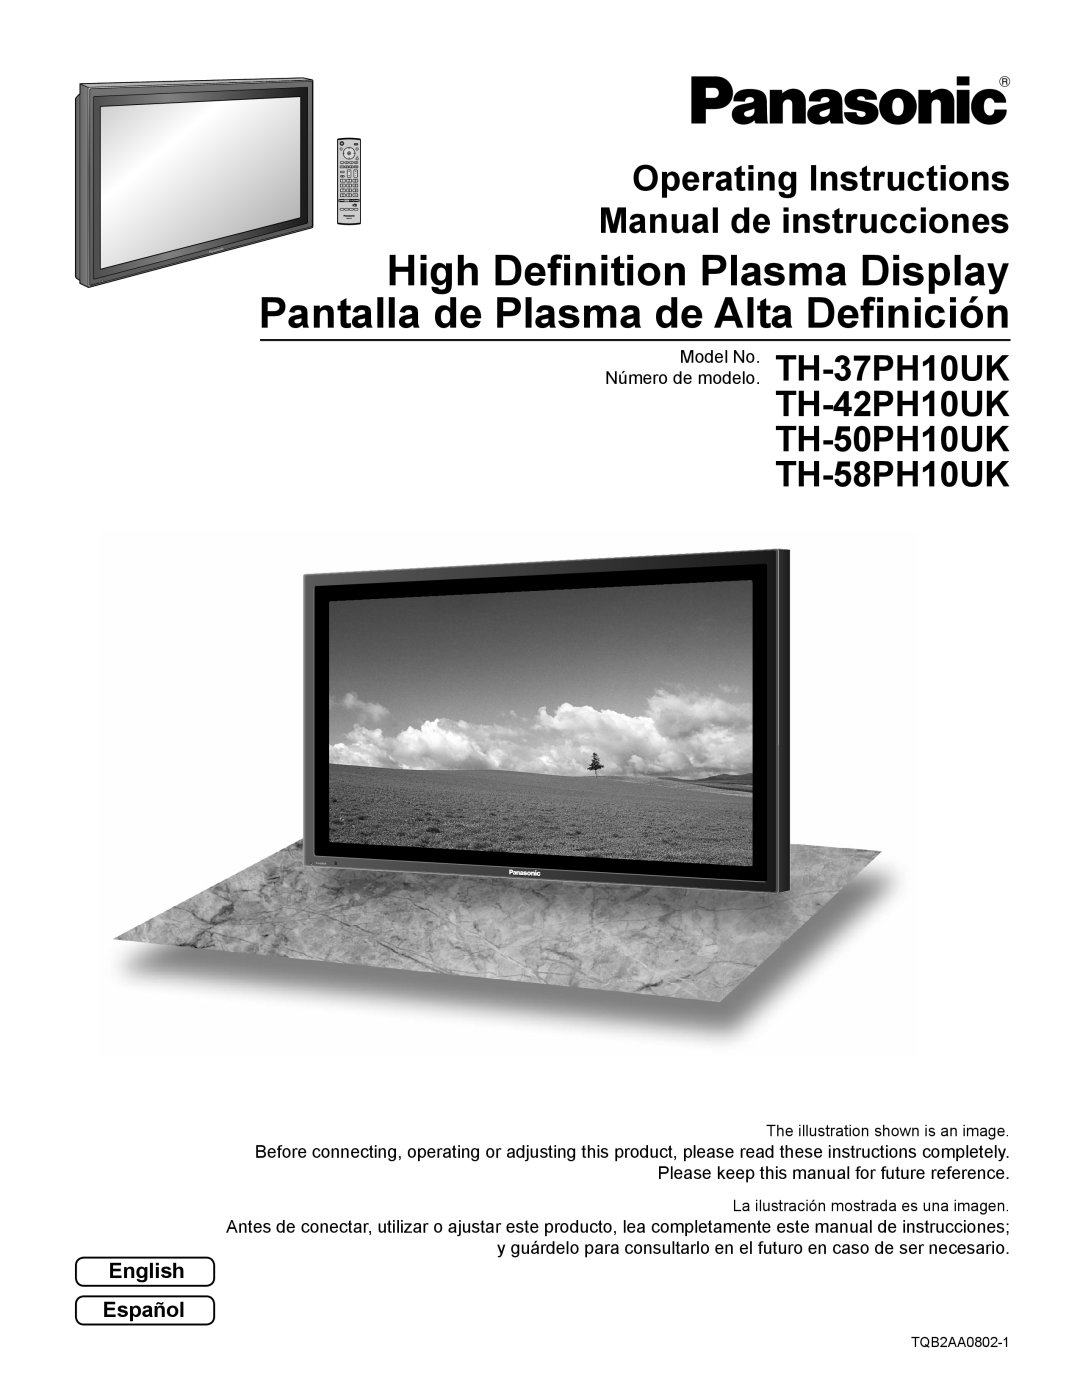 Panasonic TH-37PH10UK manual Operating Instructions Manual de instrucciones, English Español 